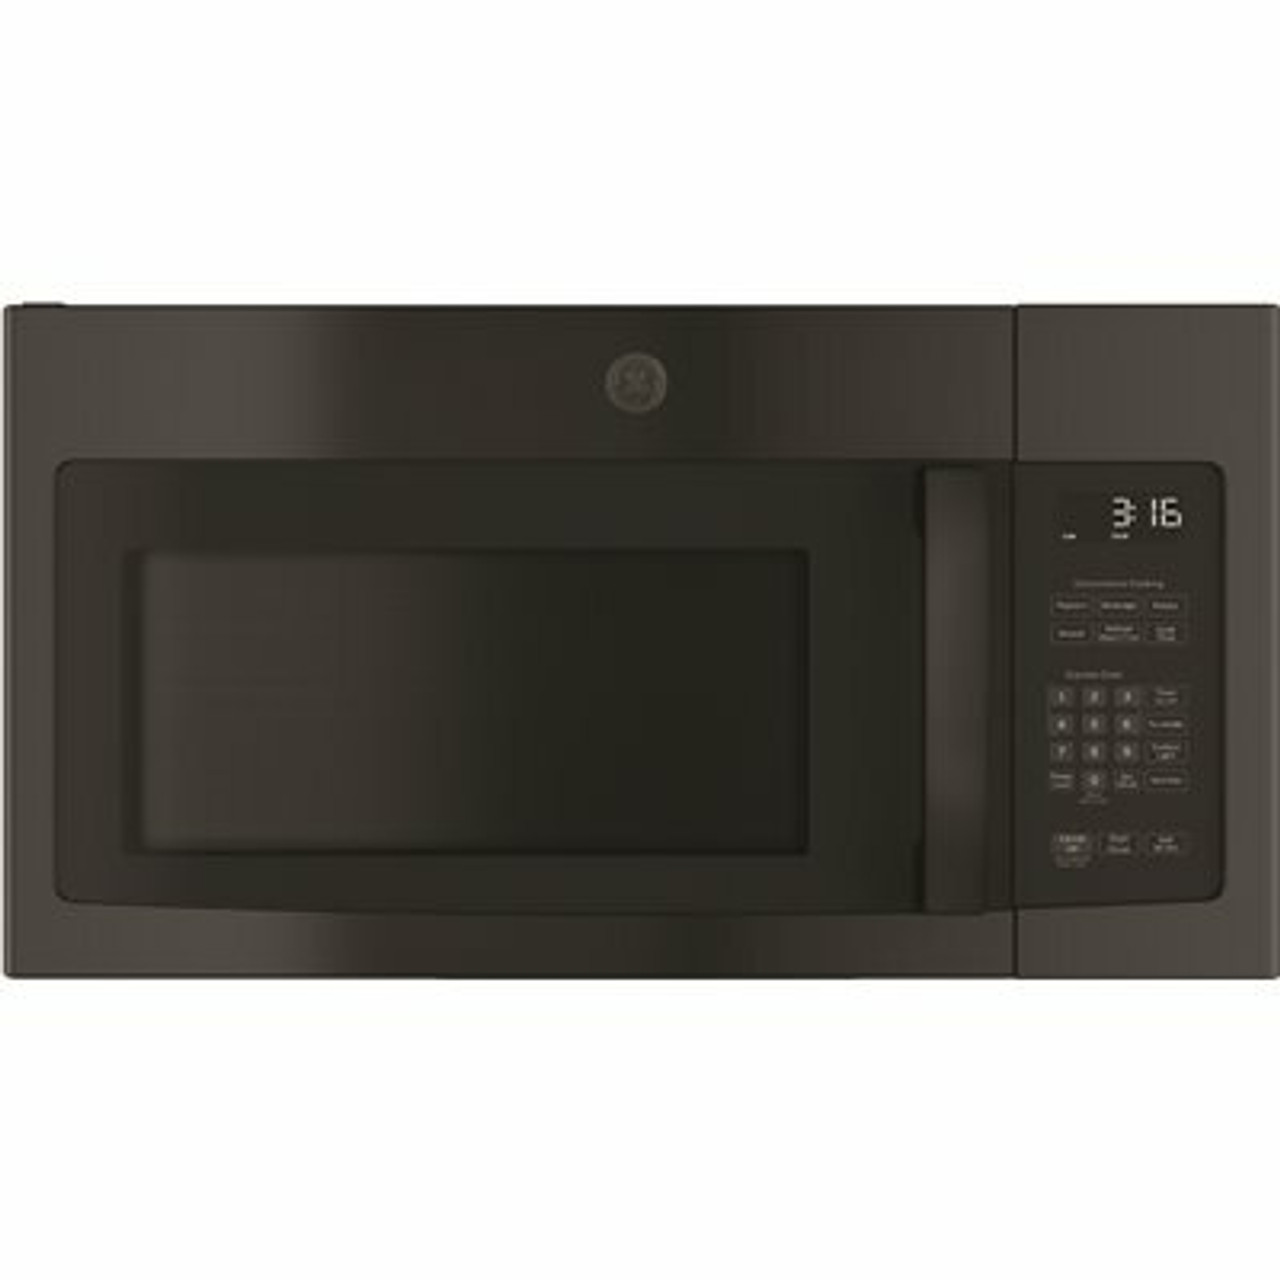 Ge 1.6 Cu. Ft. Over The Range Microwave In Black